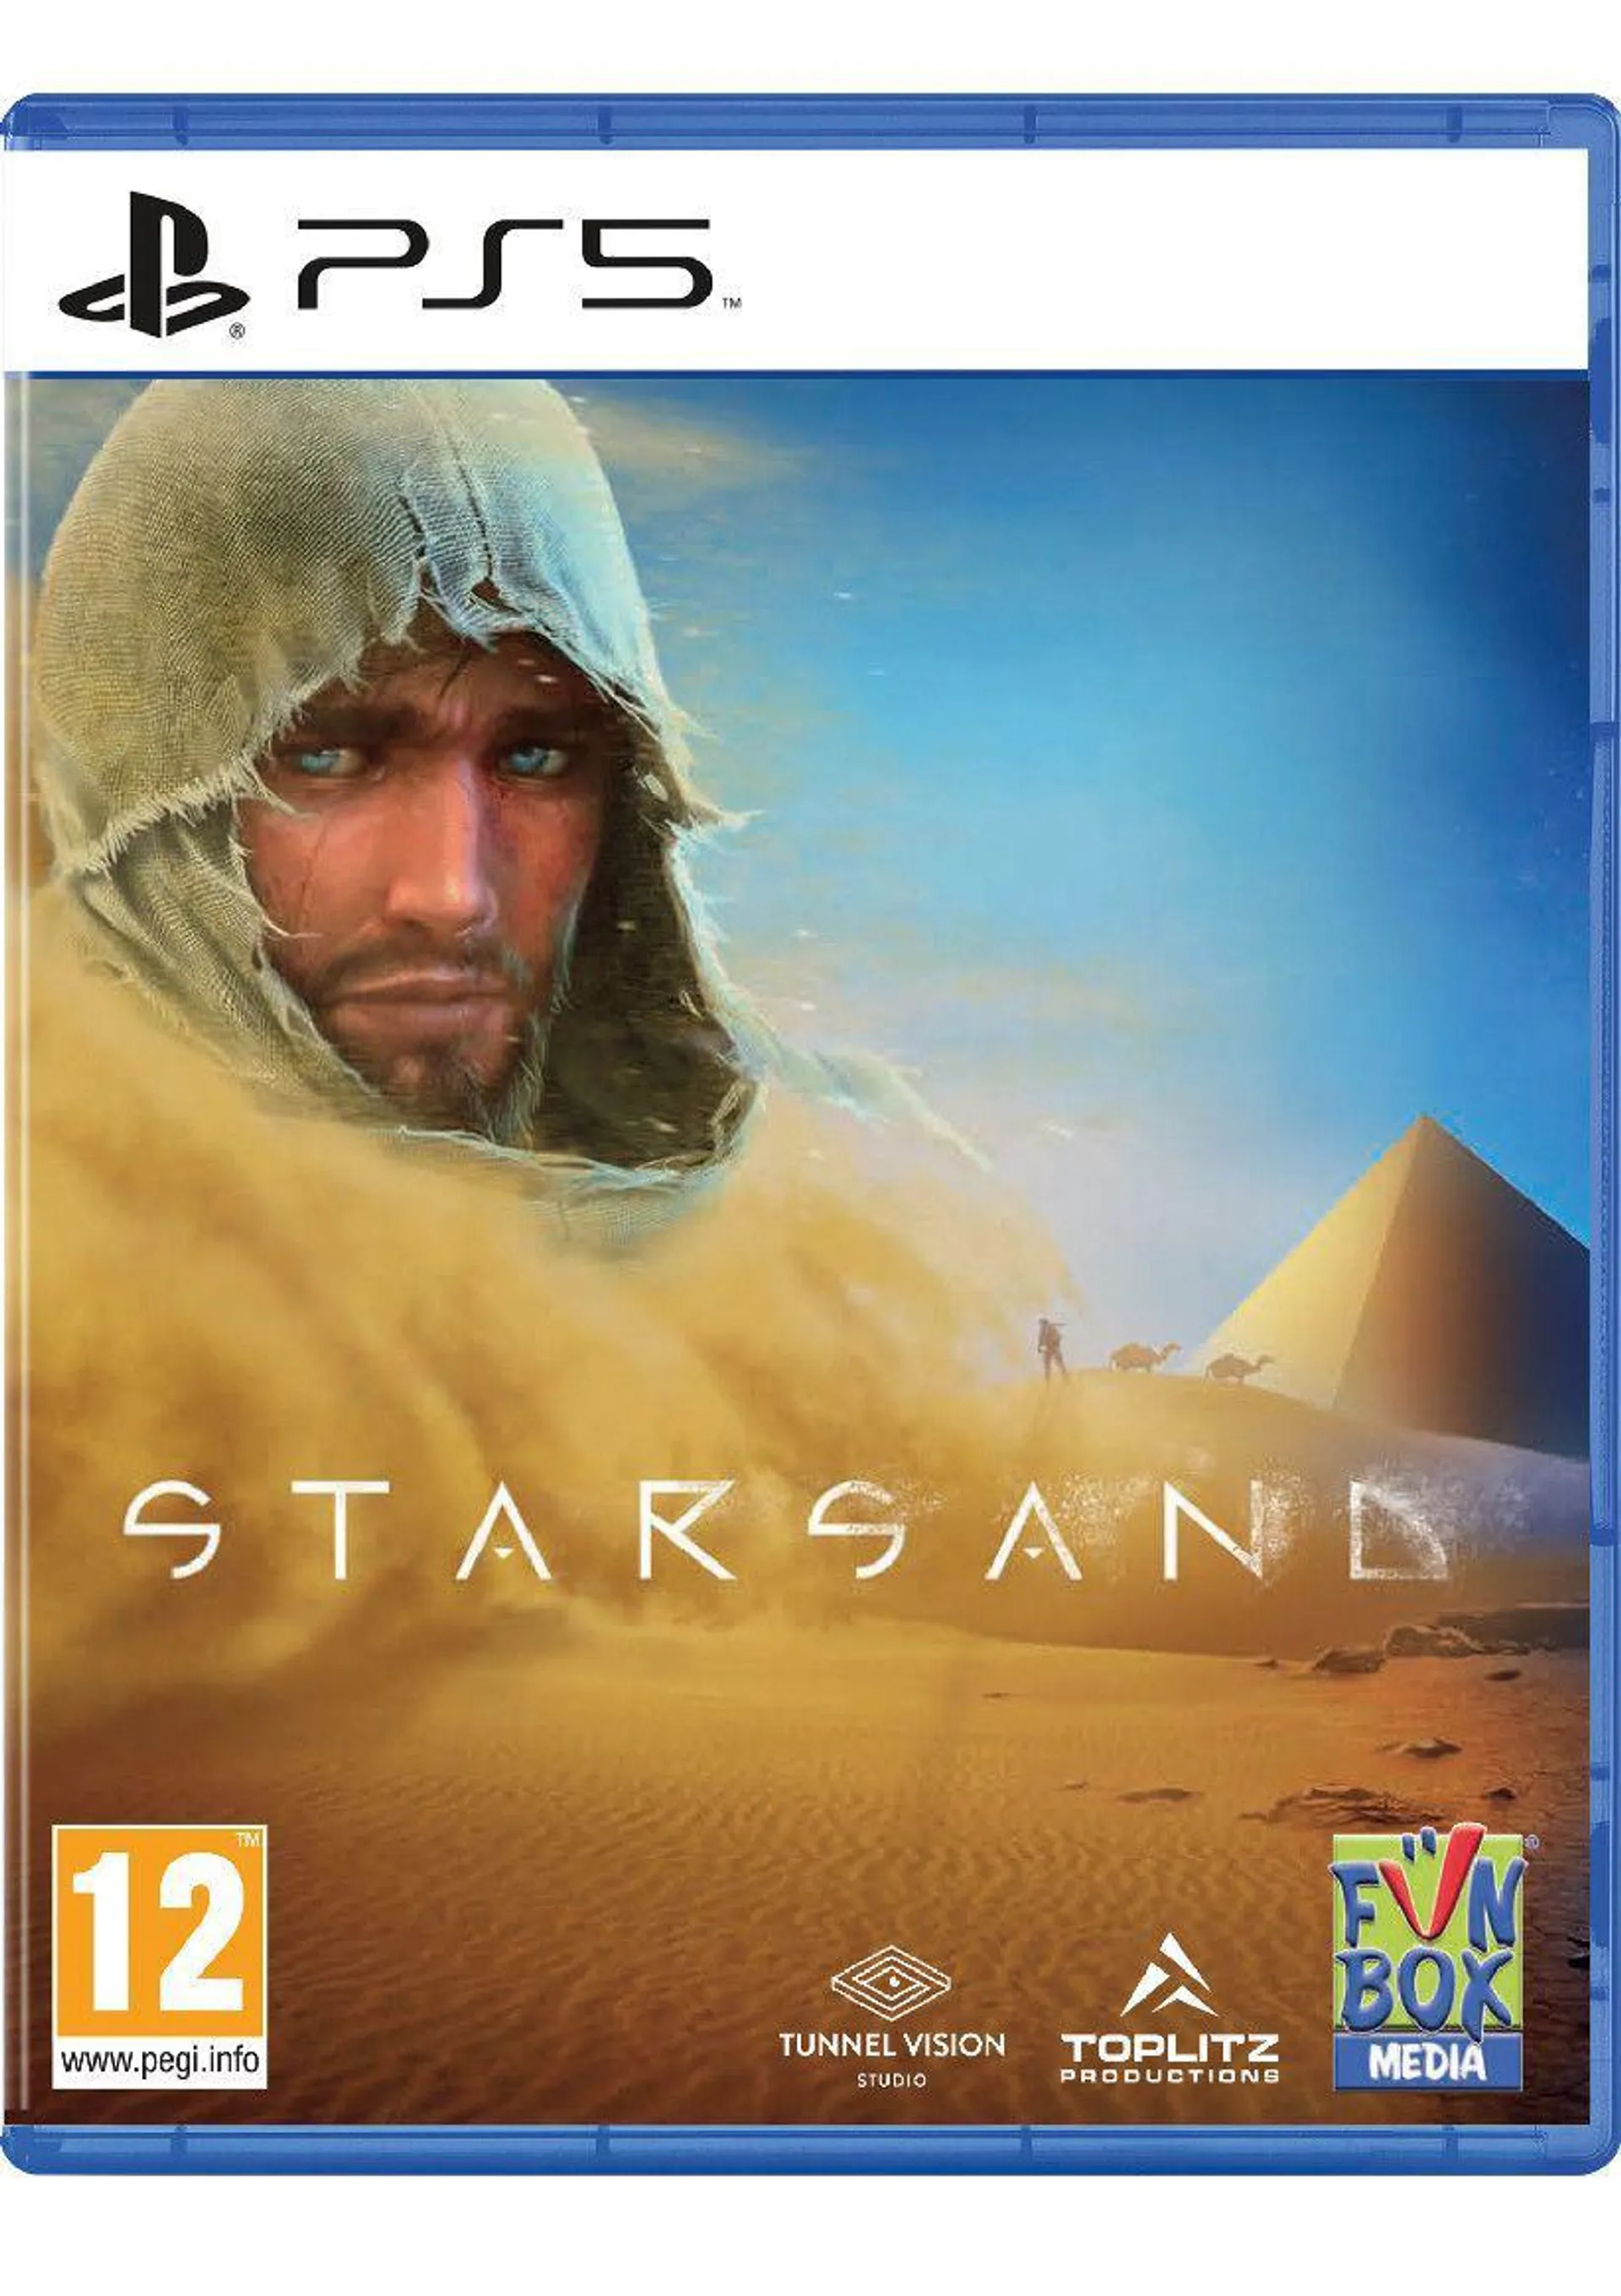 Starsand on PlayStation 5